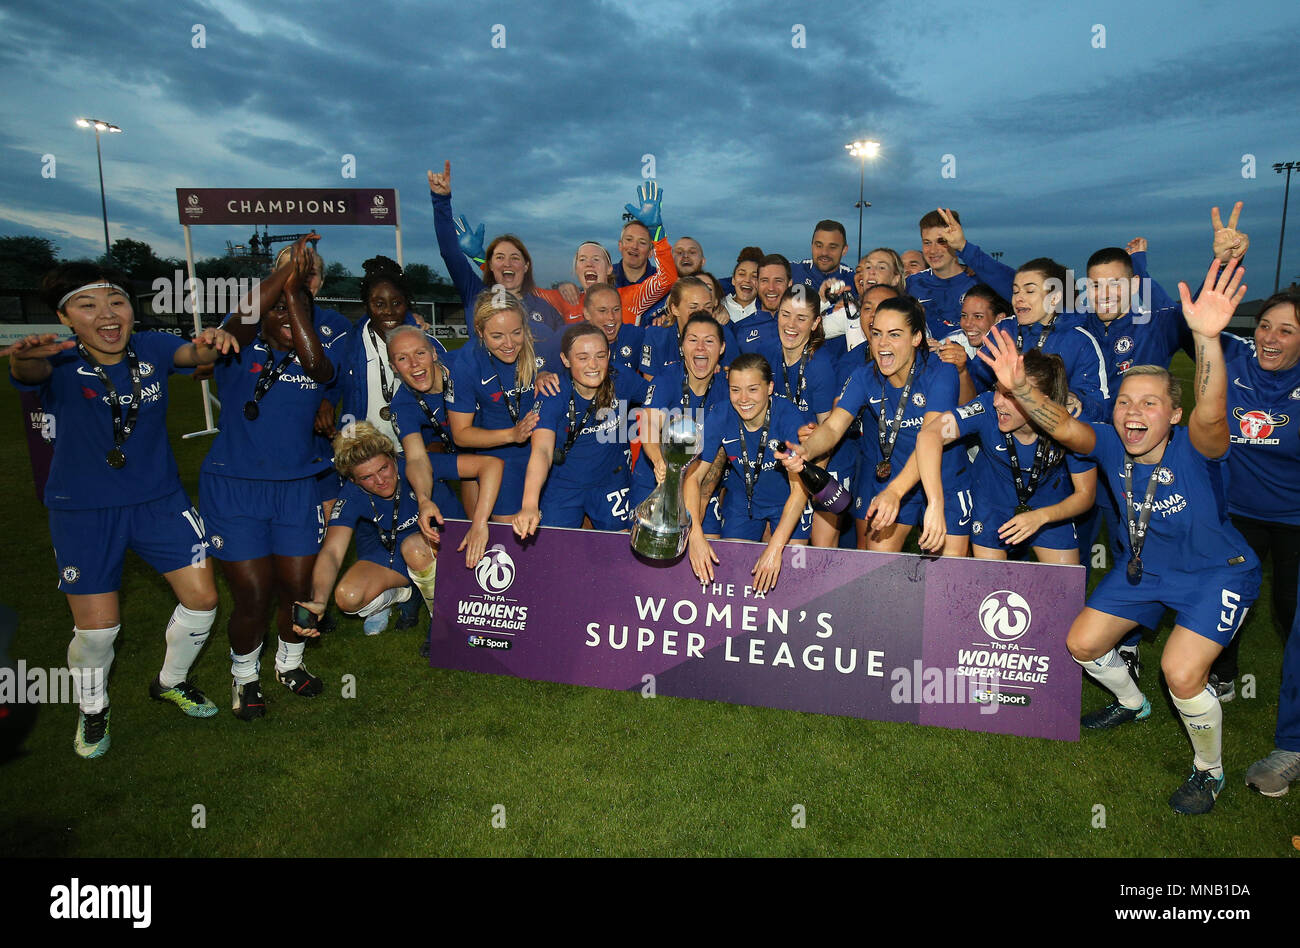 Chelsea Women's Super League Champions during the Women's Super League match at Stoke Gifford Stadium, Bristol. Stock Photo